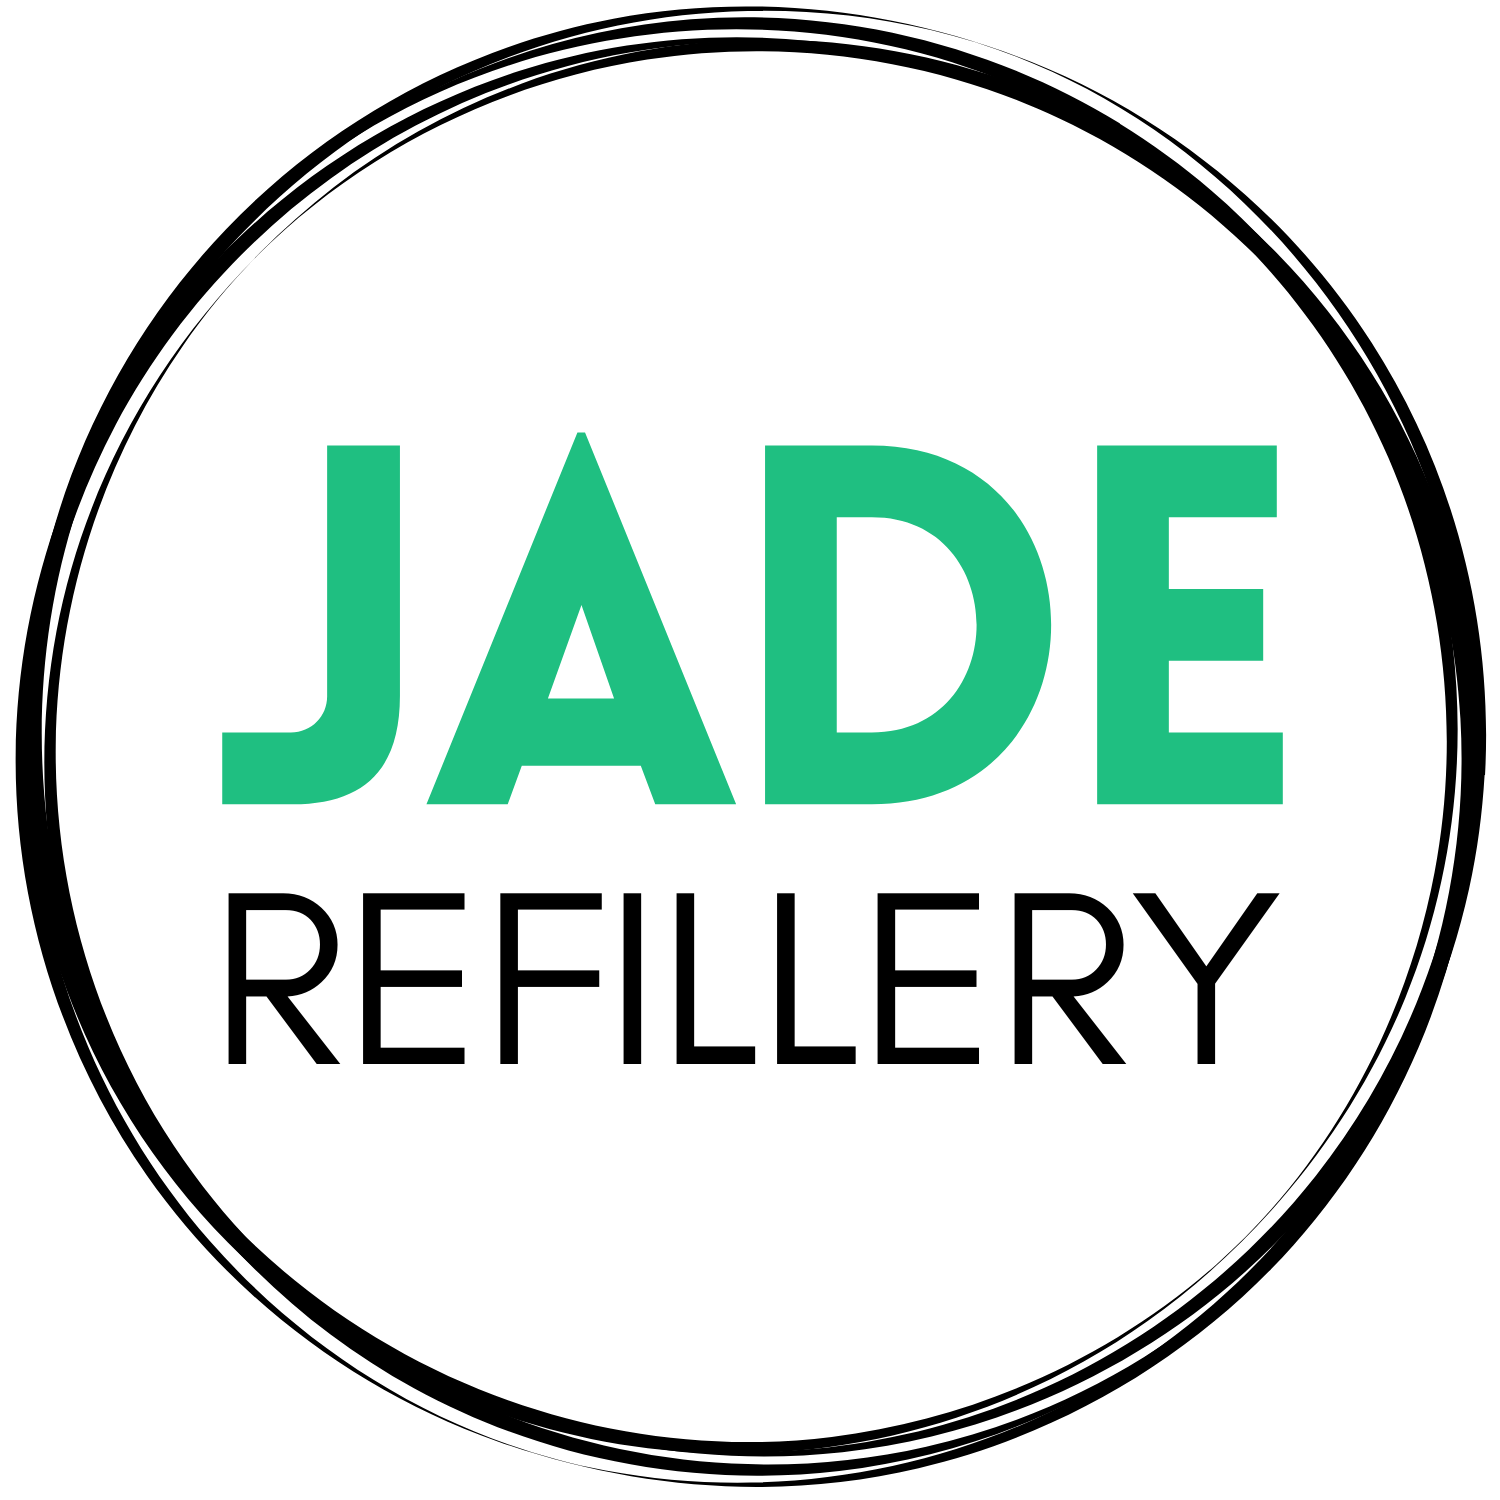 Jade Refillery